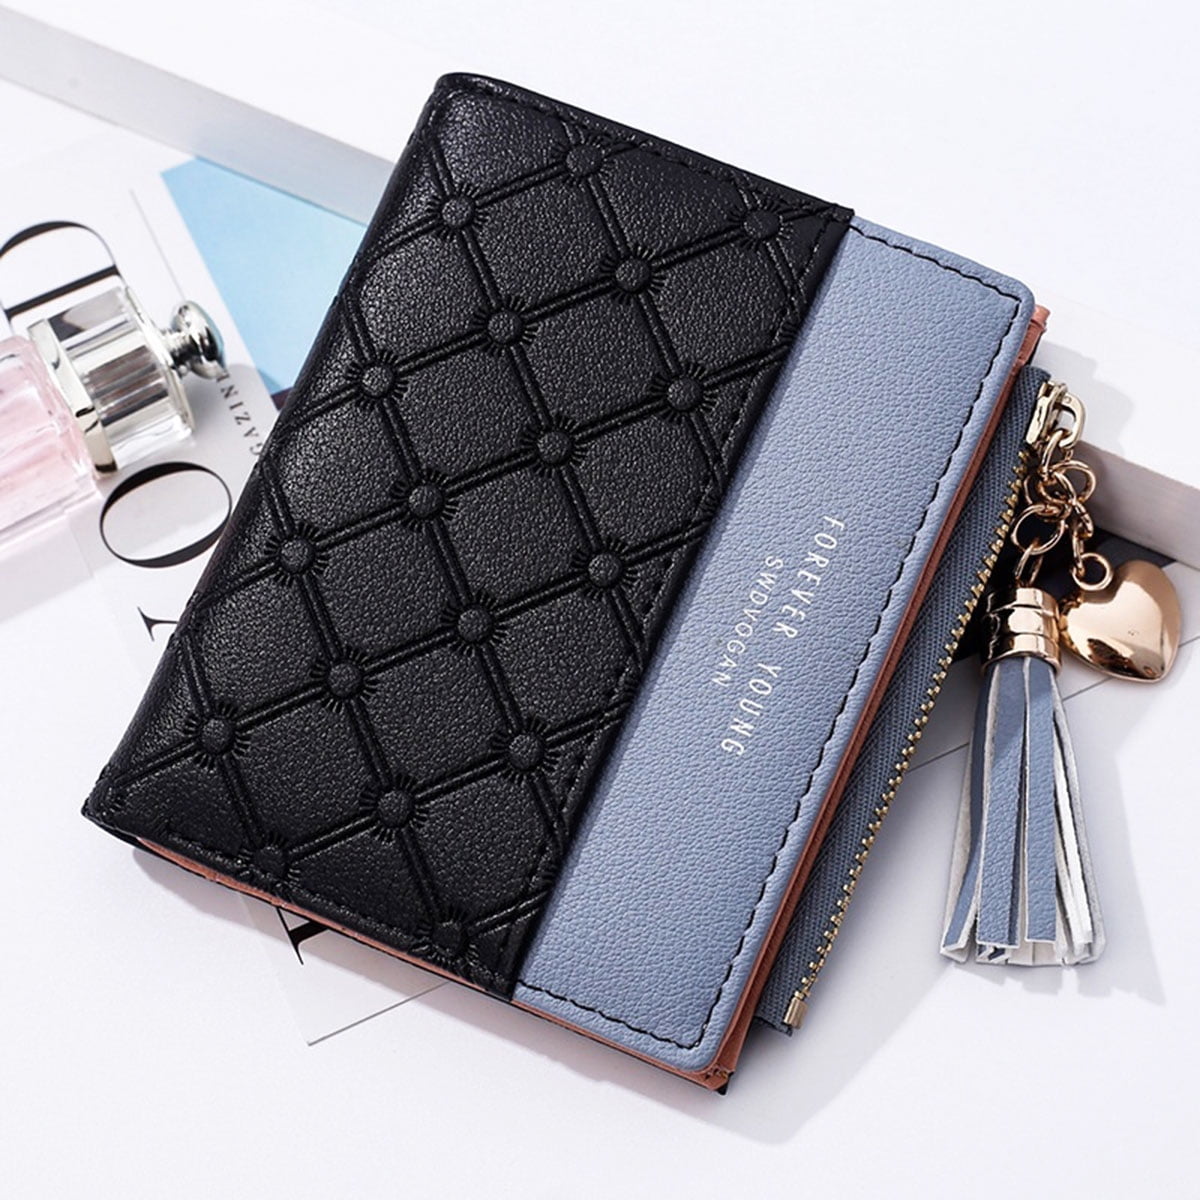 Fashion Printed Women Girl Long Wallet Clutch Purse Bag Zip Handbag Card Slot 